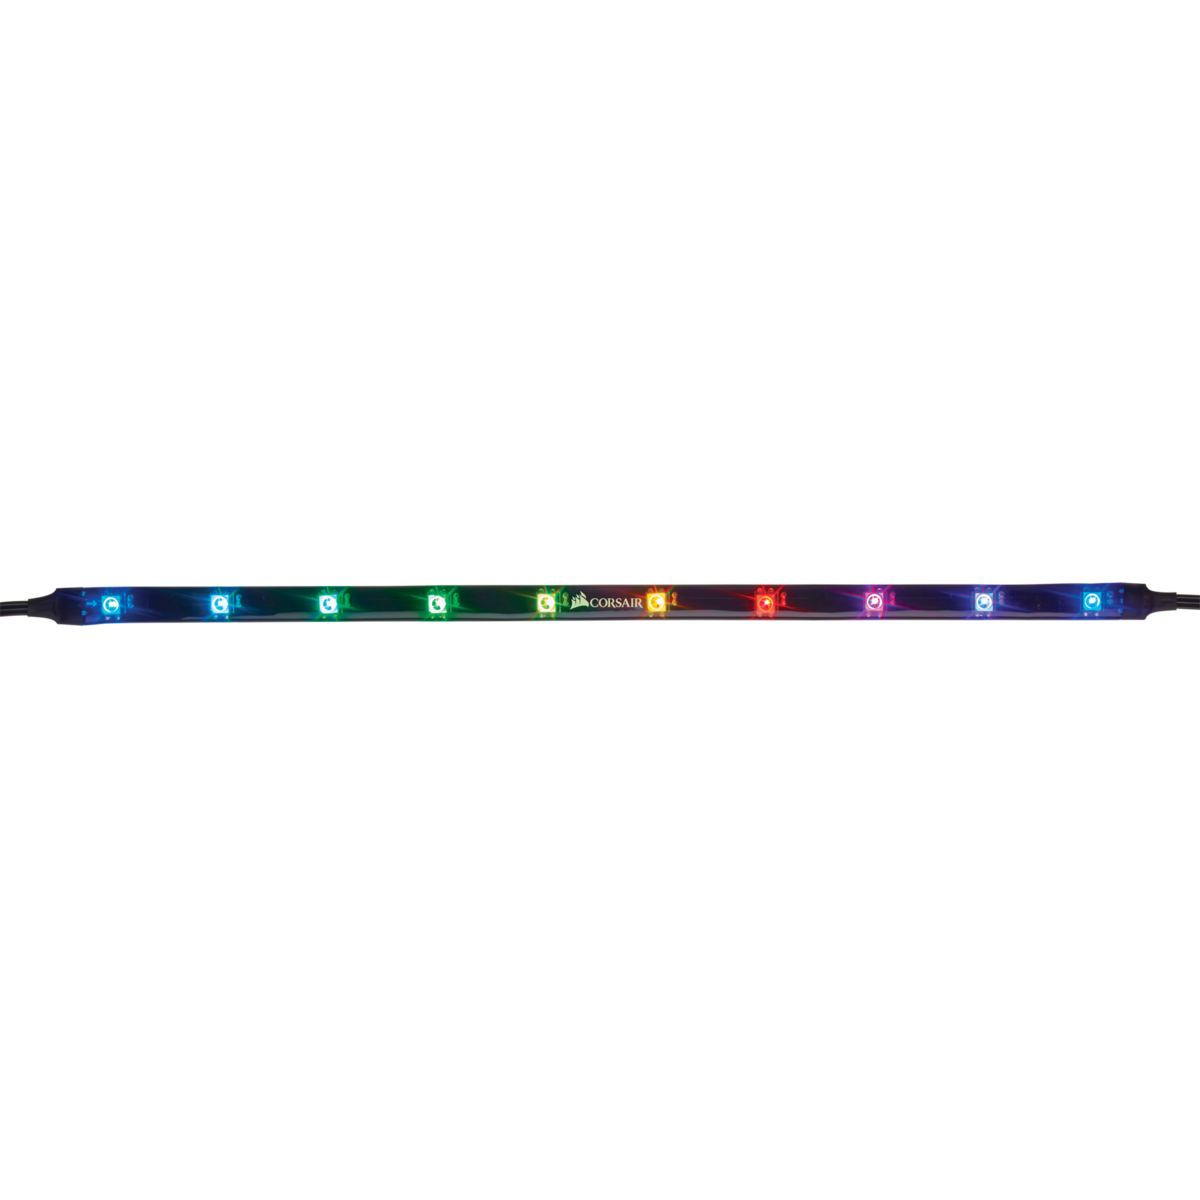 Corsair Lighting Node Pro with 4 ARGB LED magnetic Strips - 410mm Per Strip